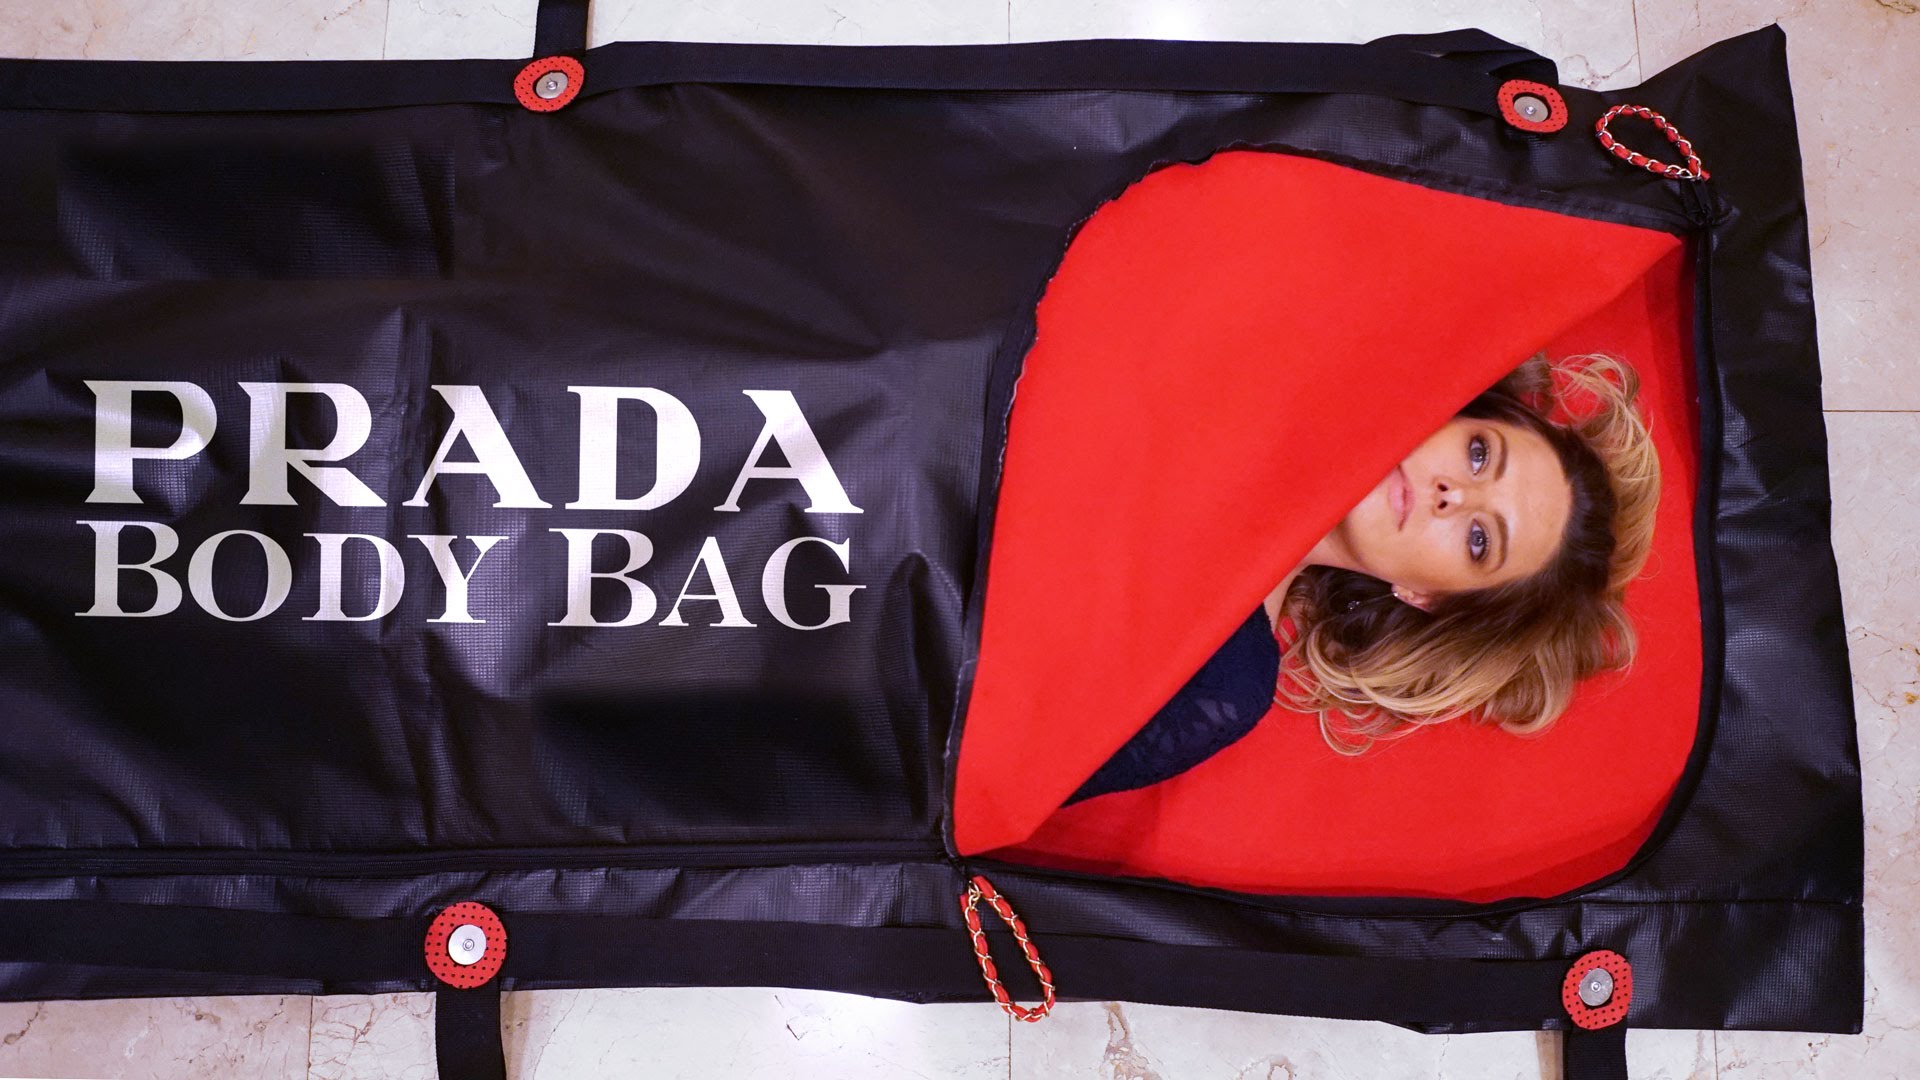 The Prada Body Bag - The Last Bag You’ll Ever Need.